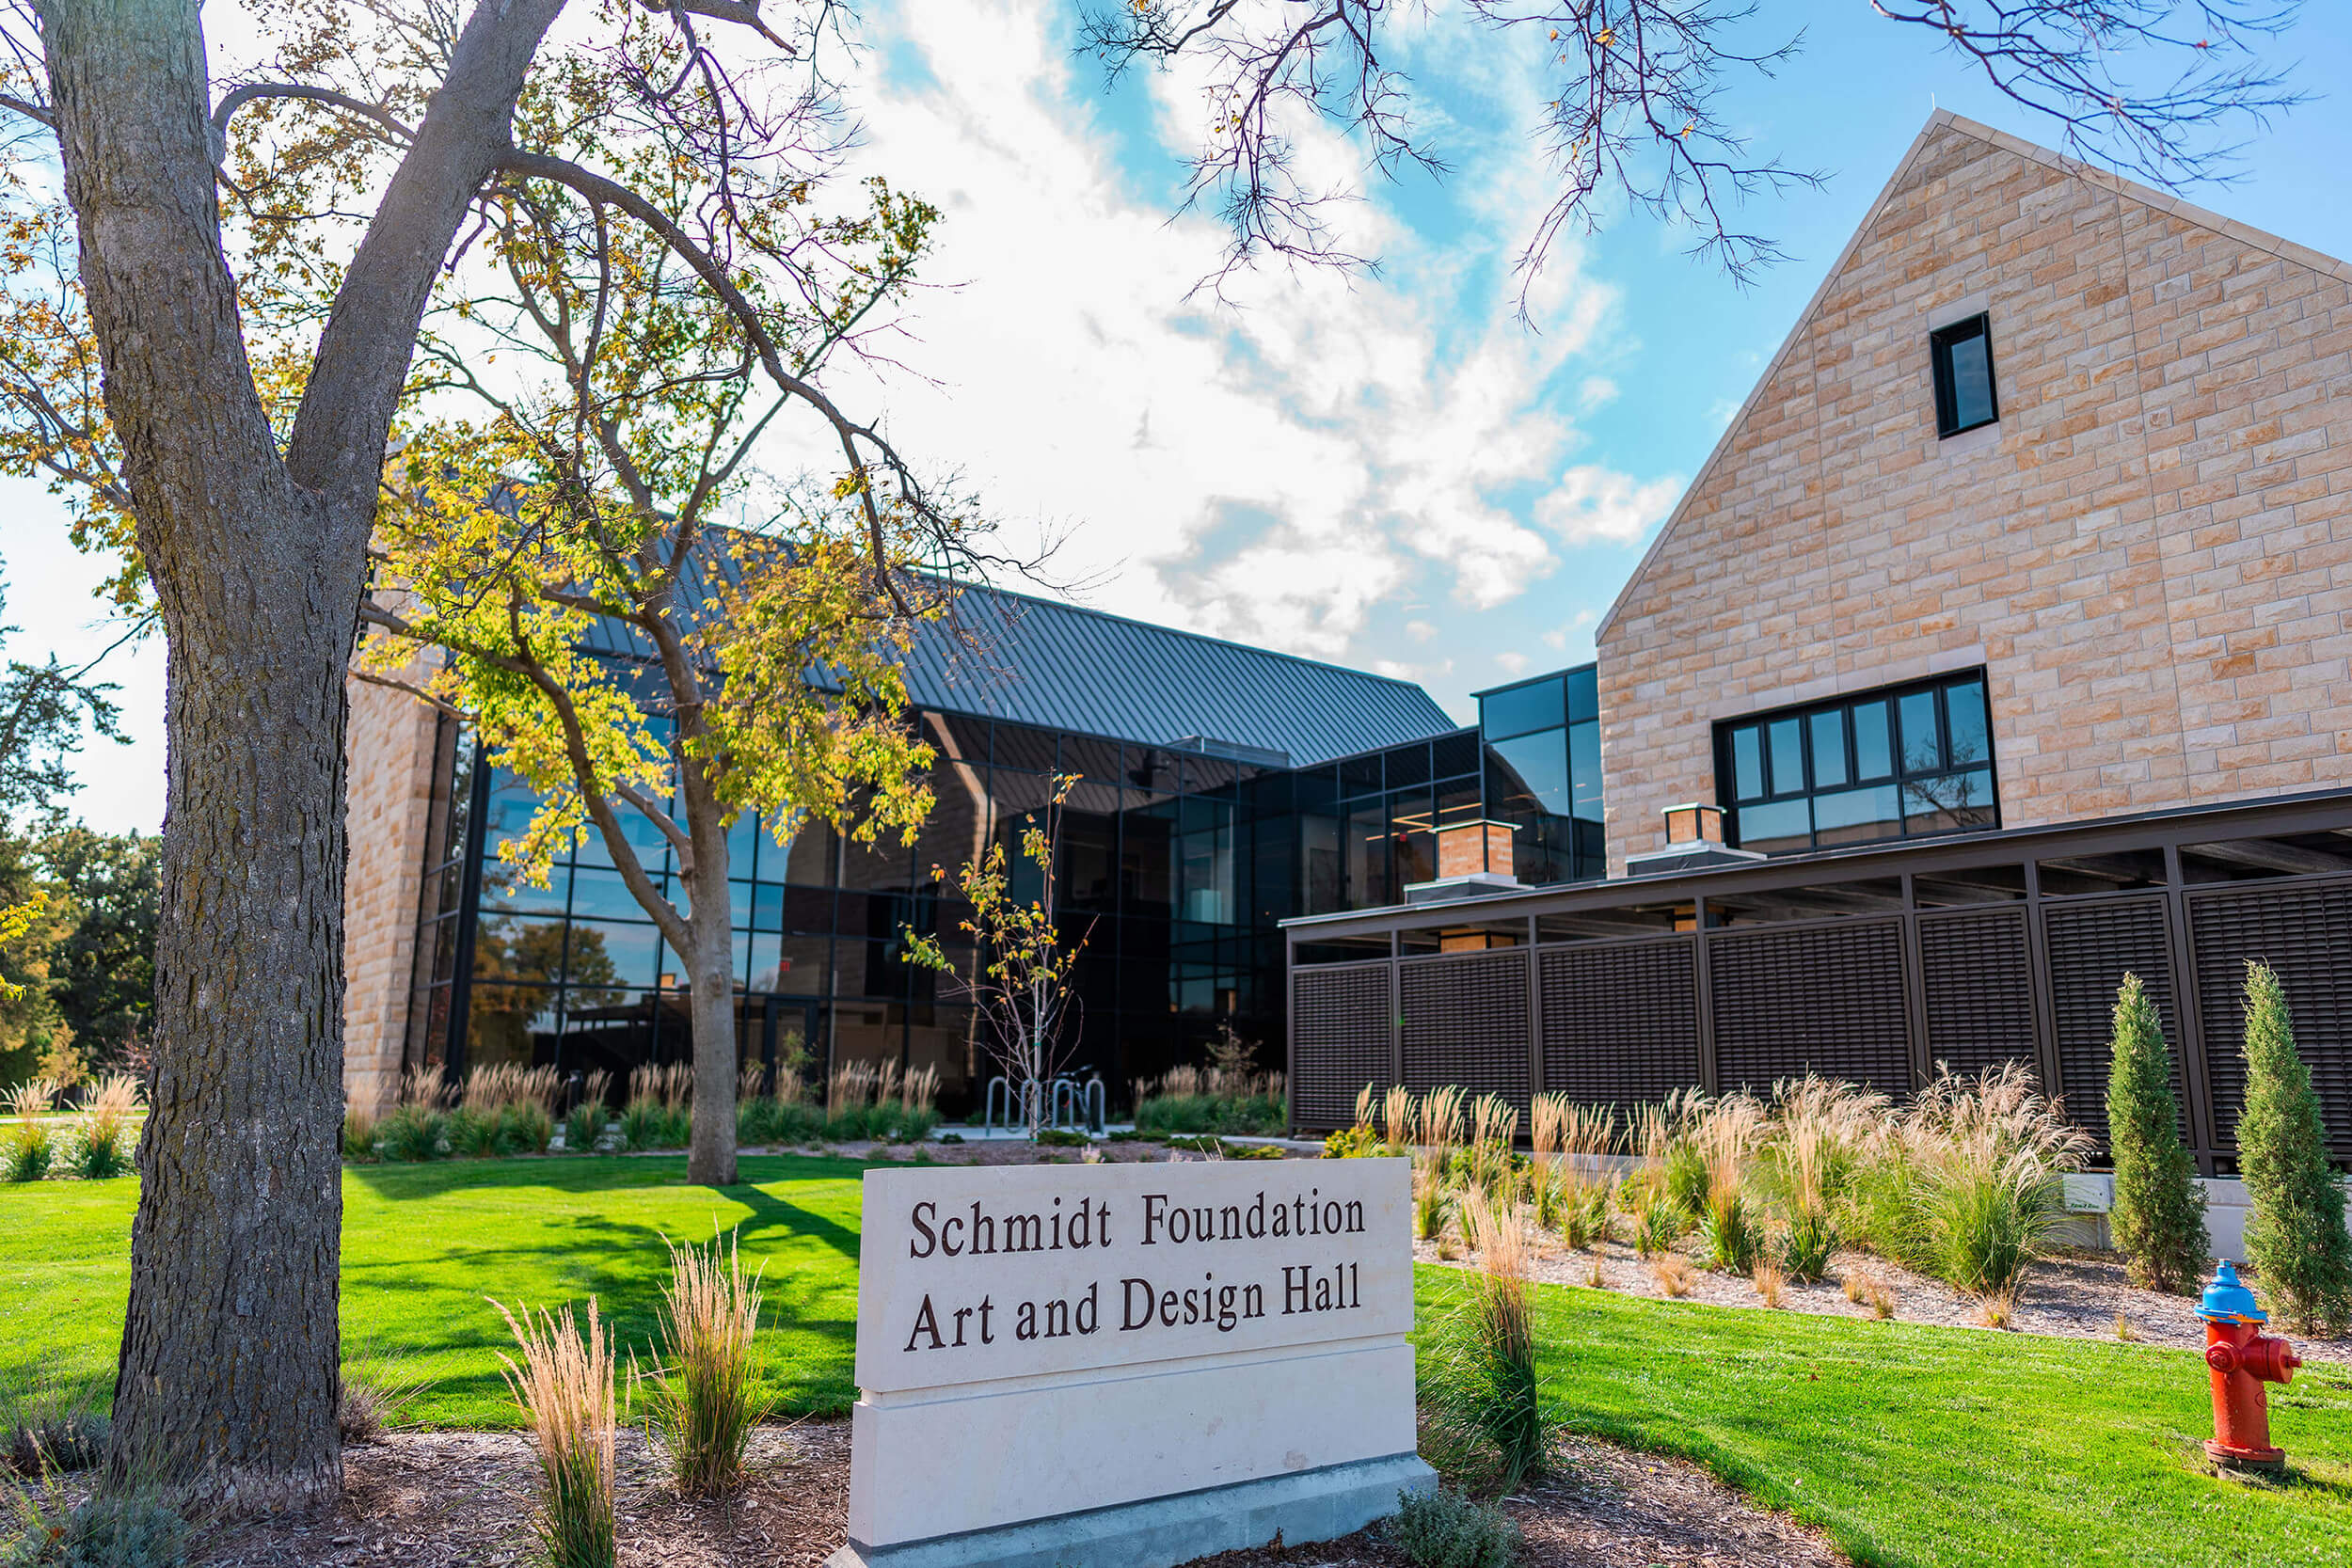 Schmidt Foundation Center for Art and Design